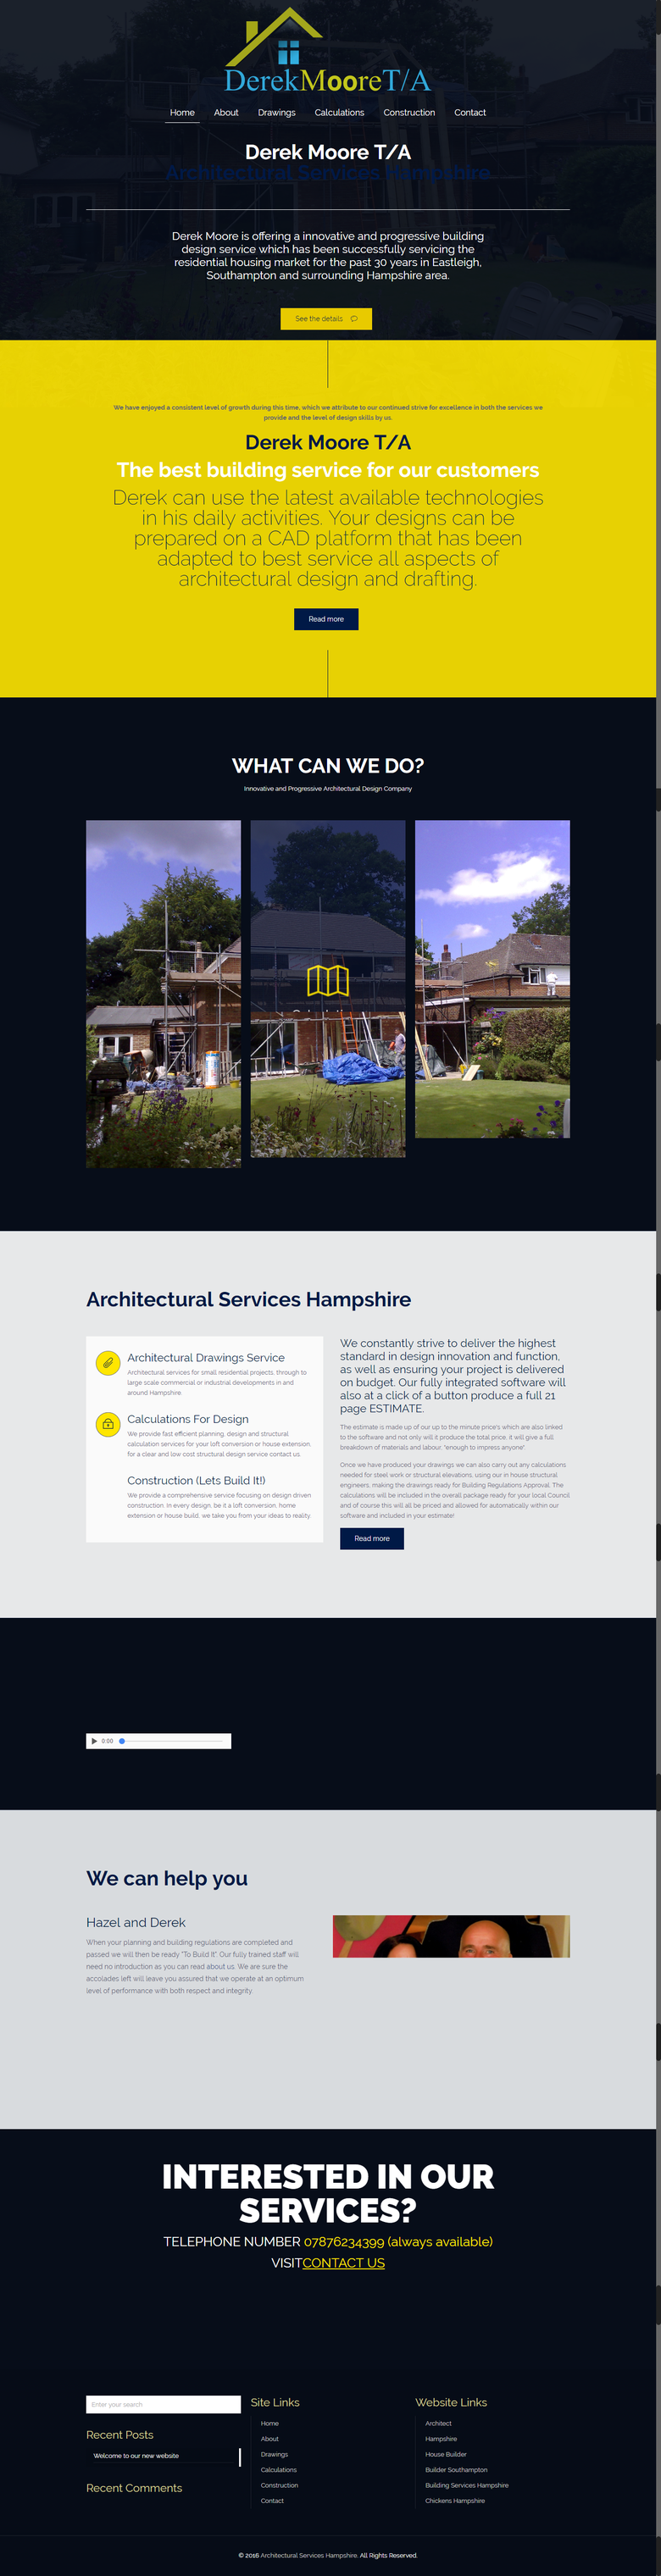 Architectural Services Hampshire